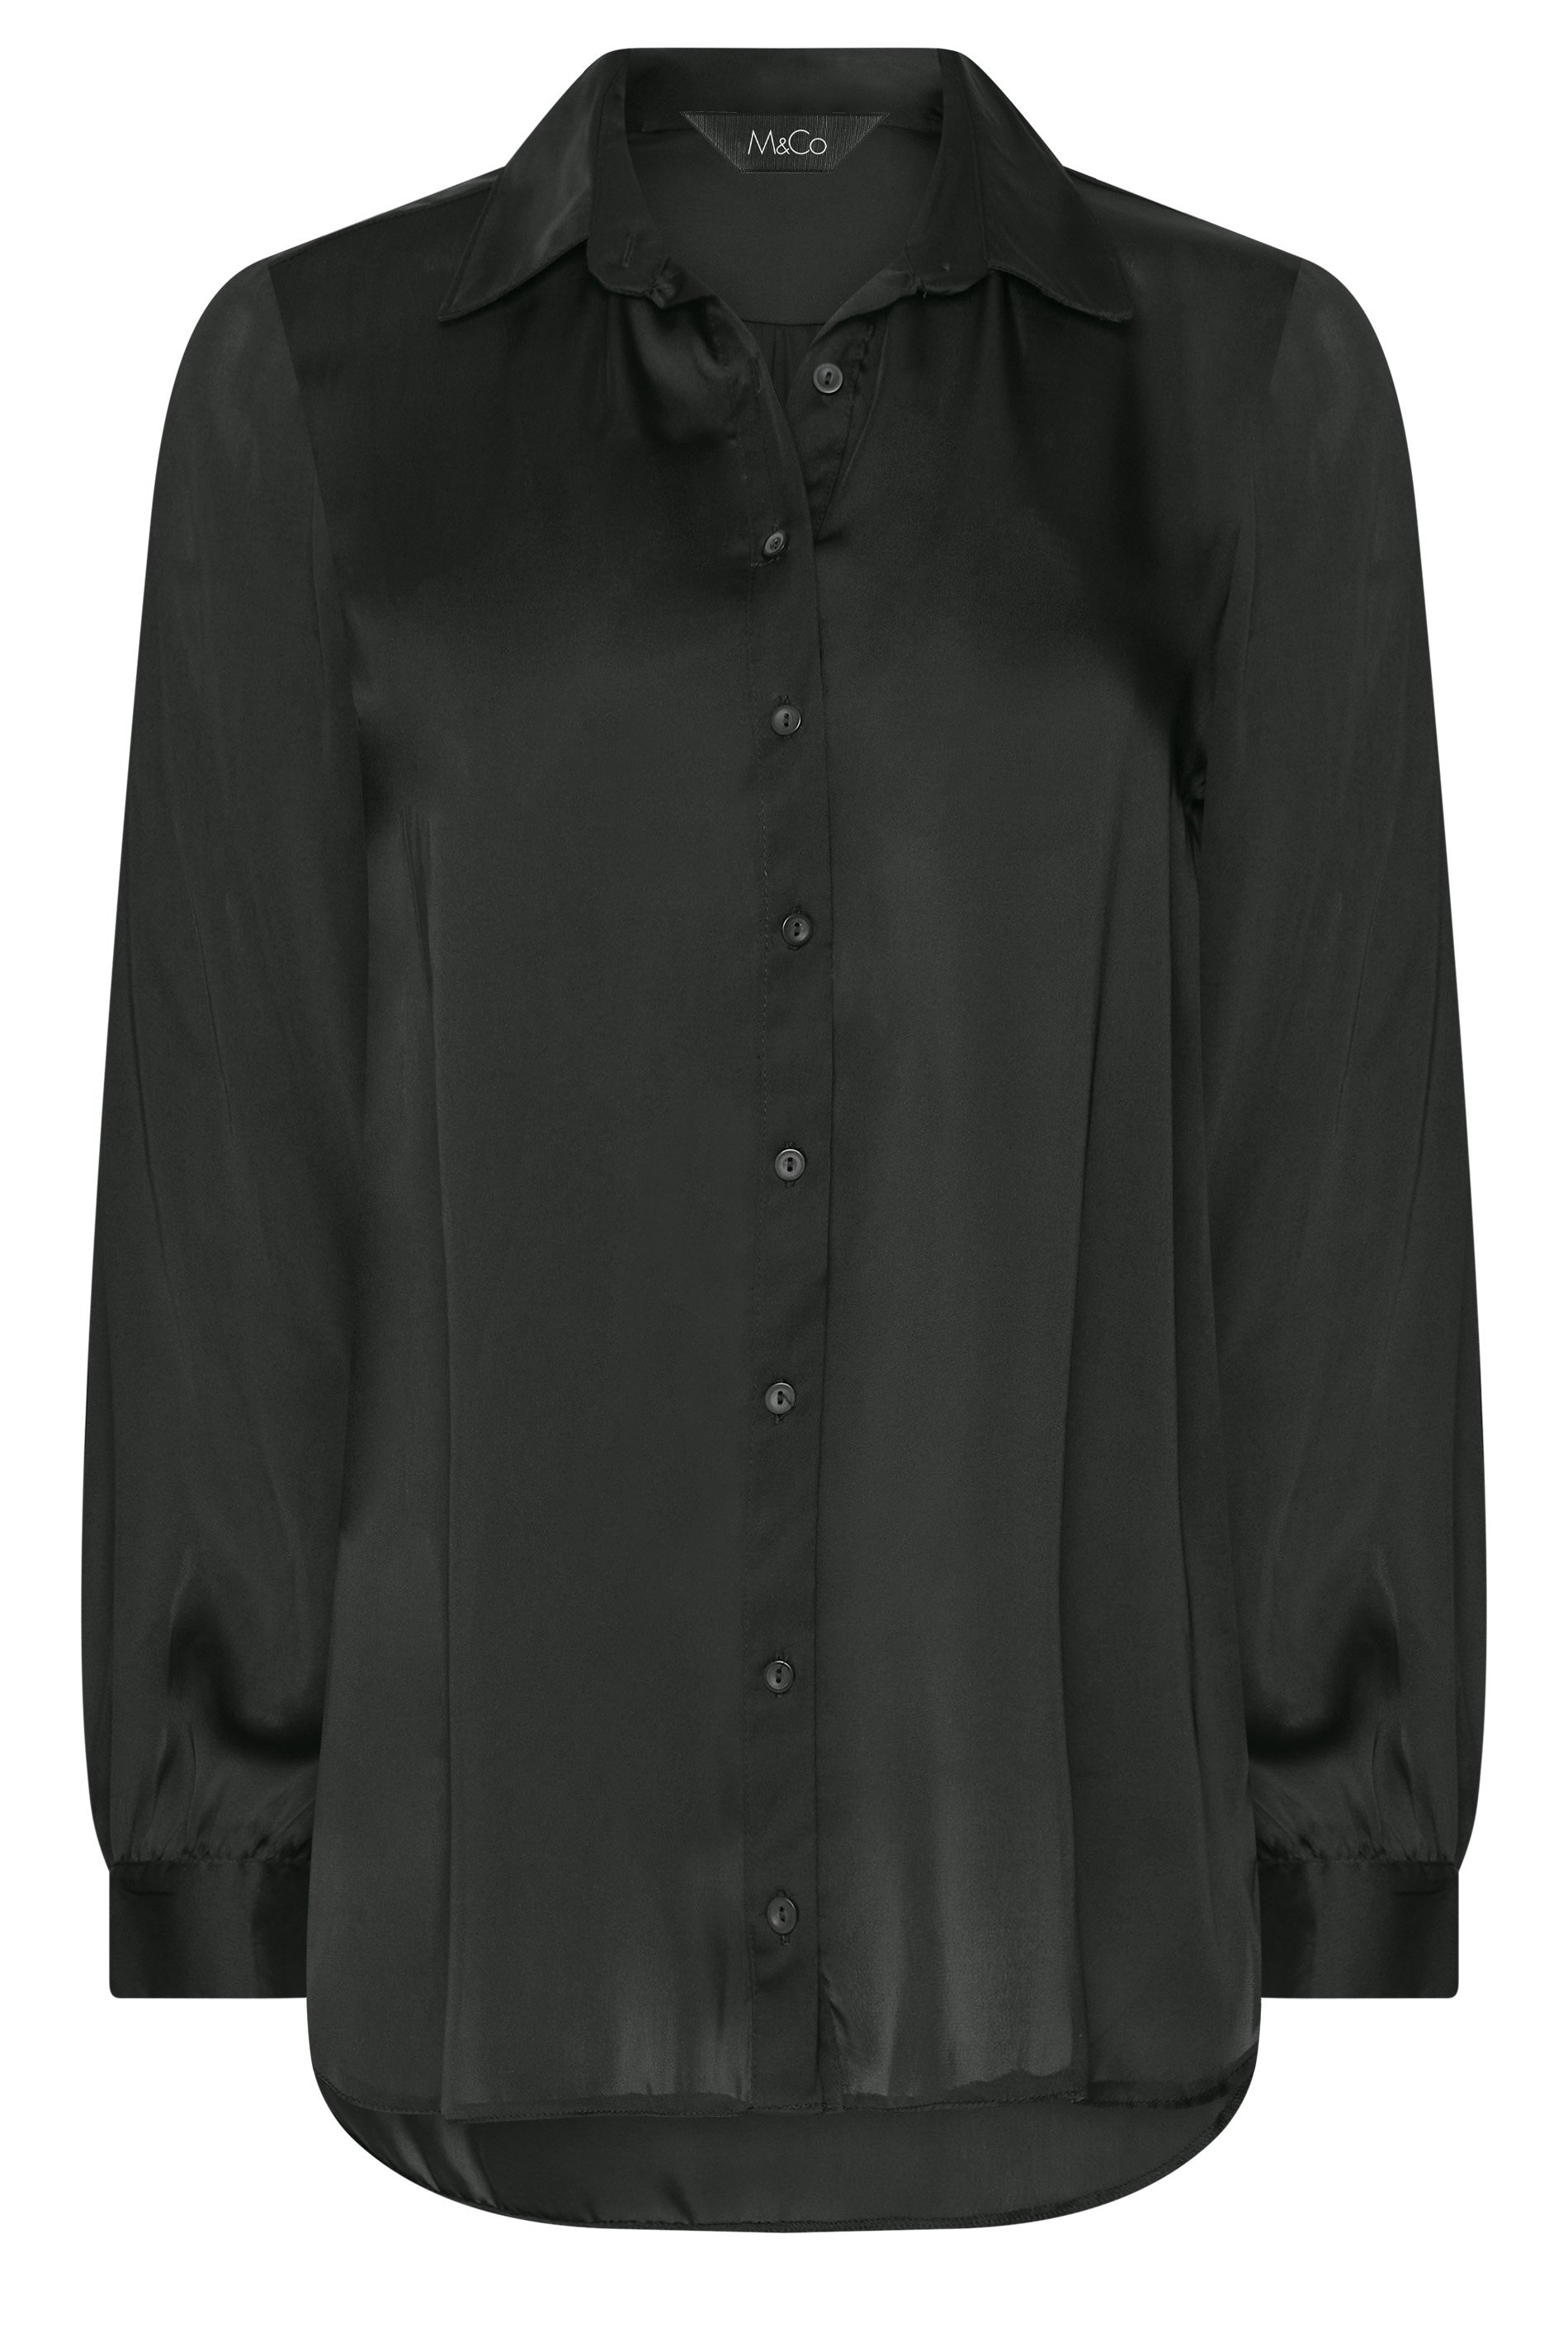 M&Co Women's Black Satin Button Through Shirt| M&Co | M&Co